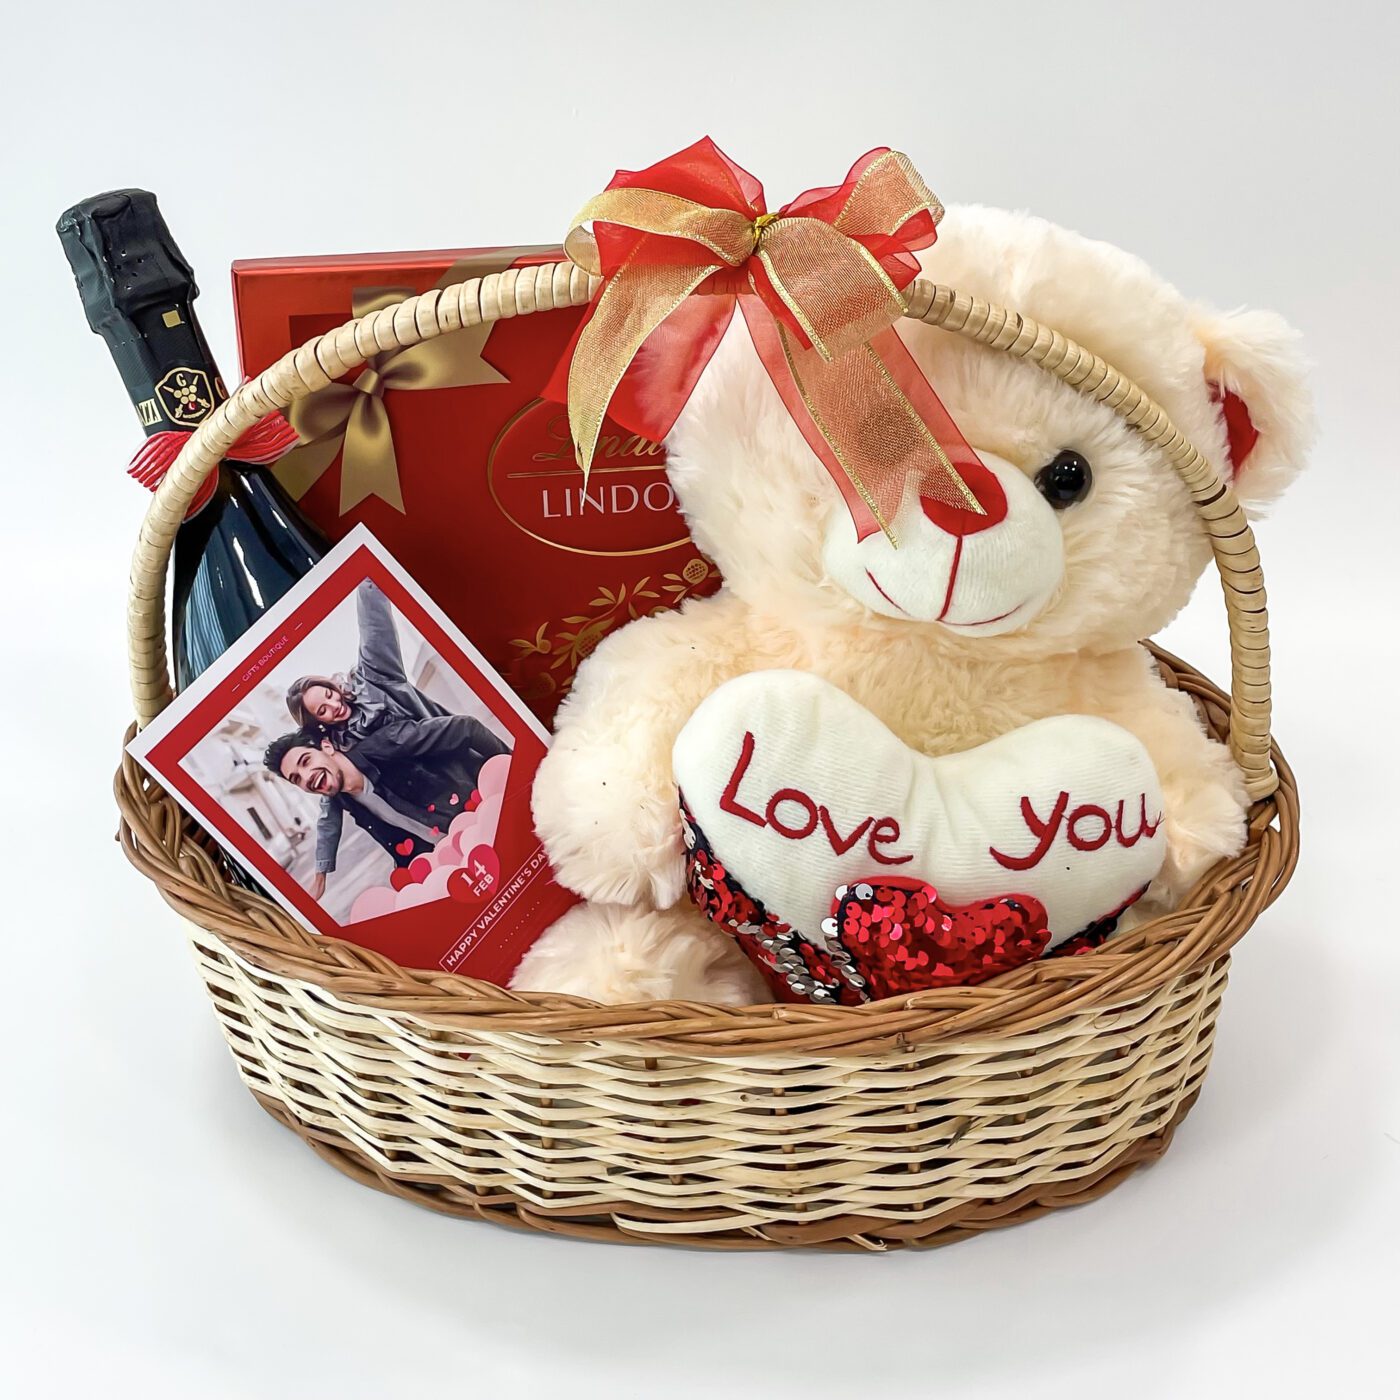 Buy/Send Endless Flower and Teddy Love Basket Online- FNP